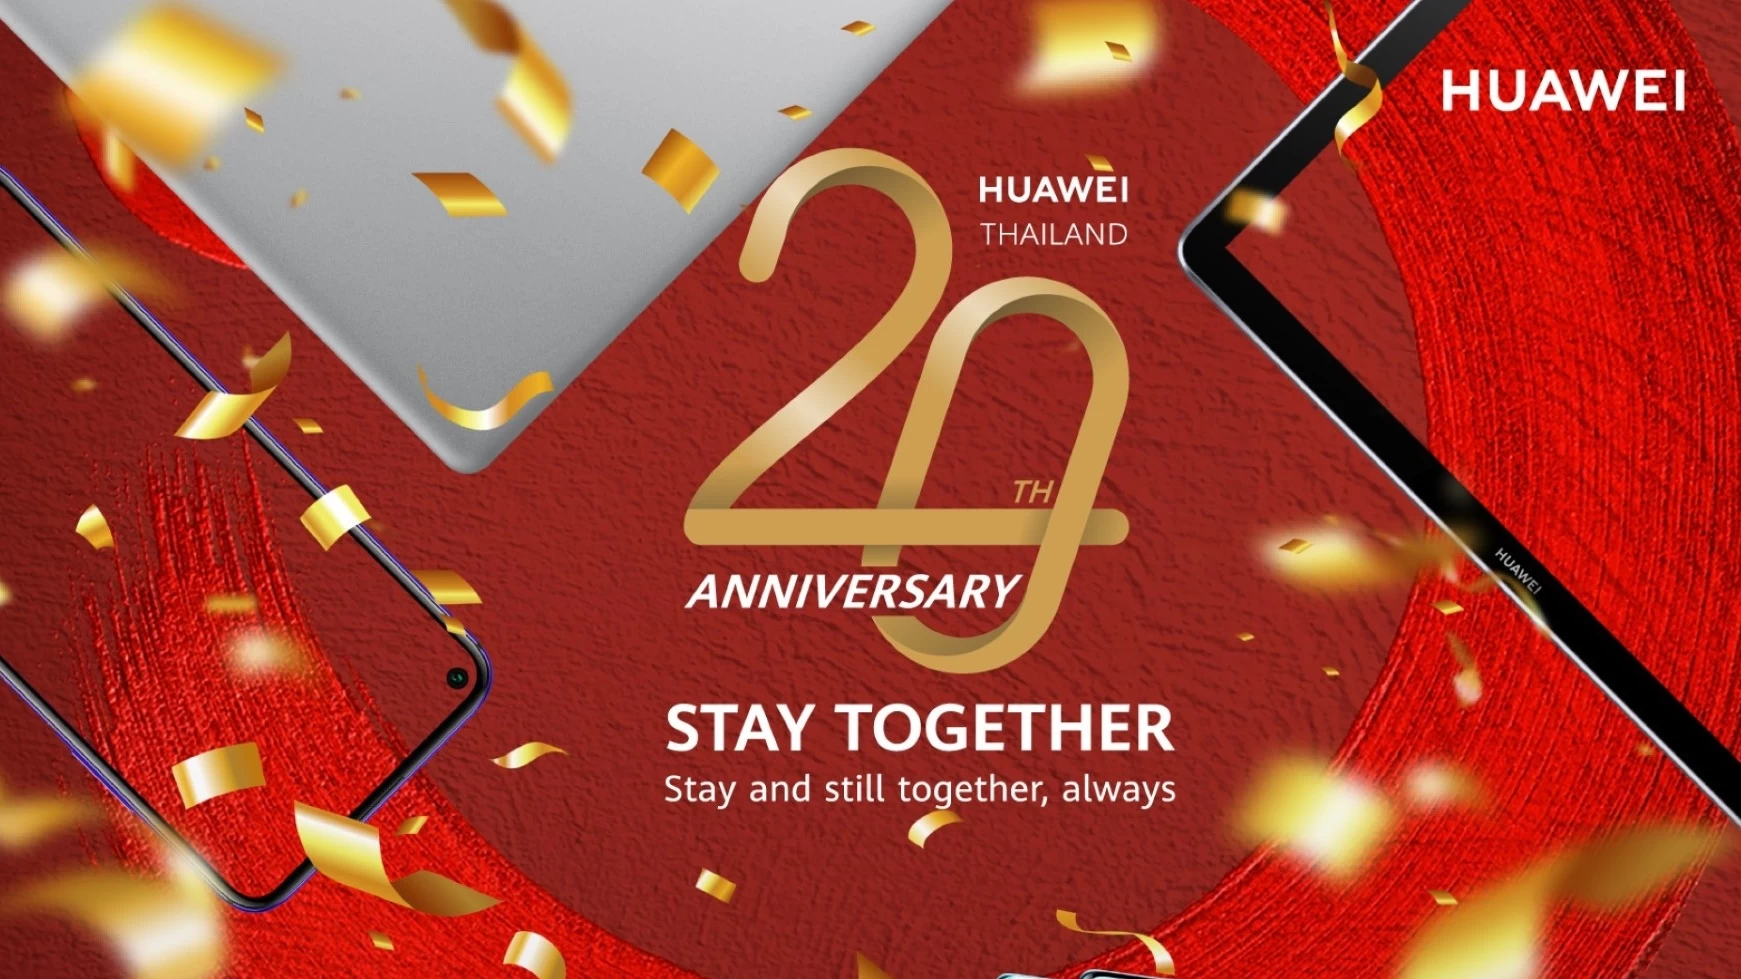 Huawei Thailand 20th Anniversary | Huawei P30 | หัวเว่ยจัดแคมเปญ “Huawei Thailand 20th Anniversary” ฉลองครบรอบ 20 ปี จัดโปรแทนคำขอบคุณ